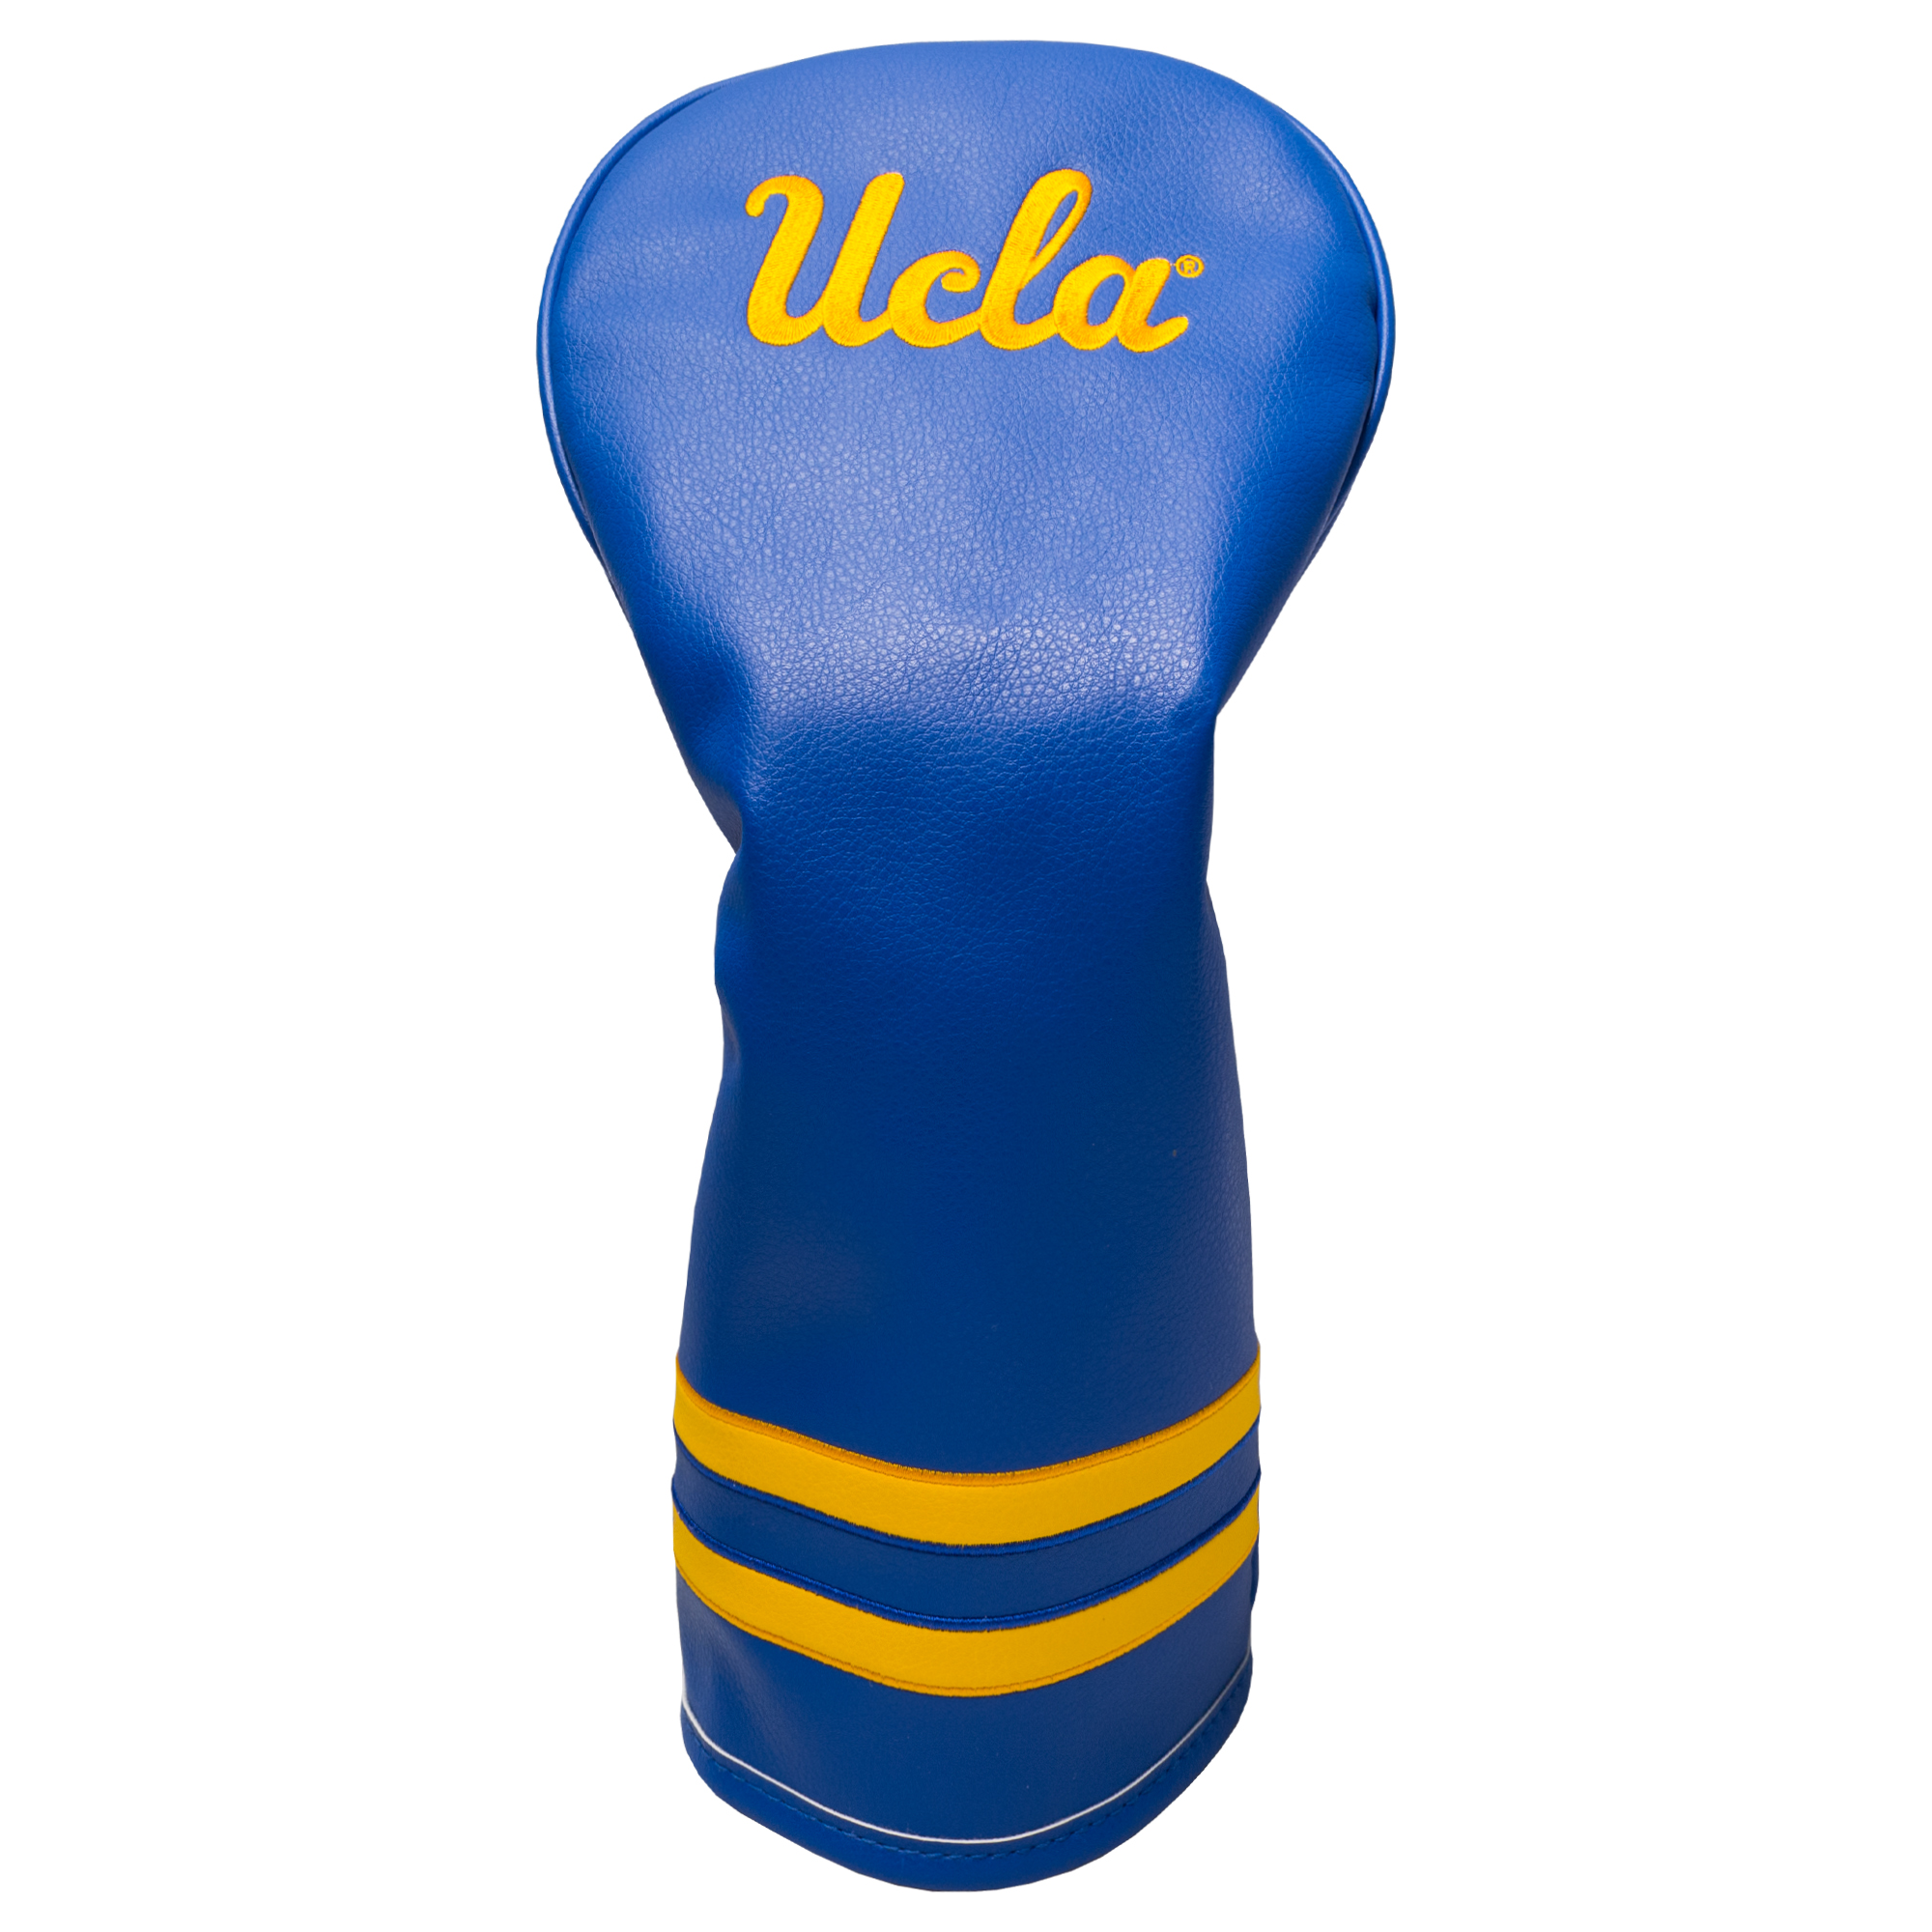 UCLA Vintage Fairway Headcover